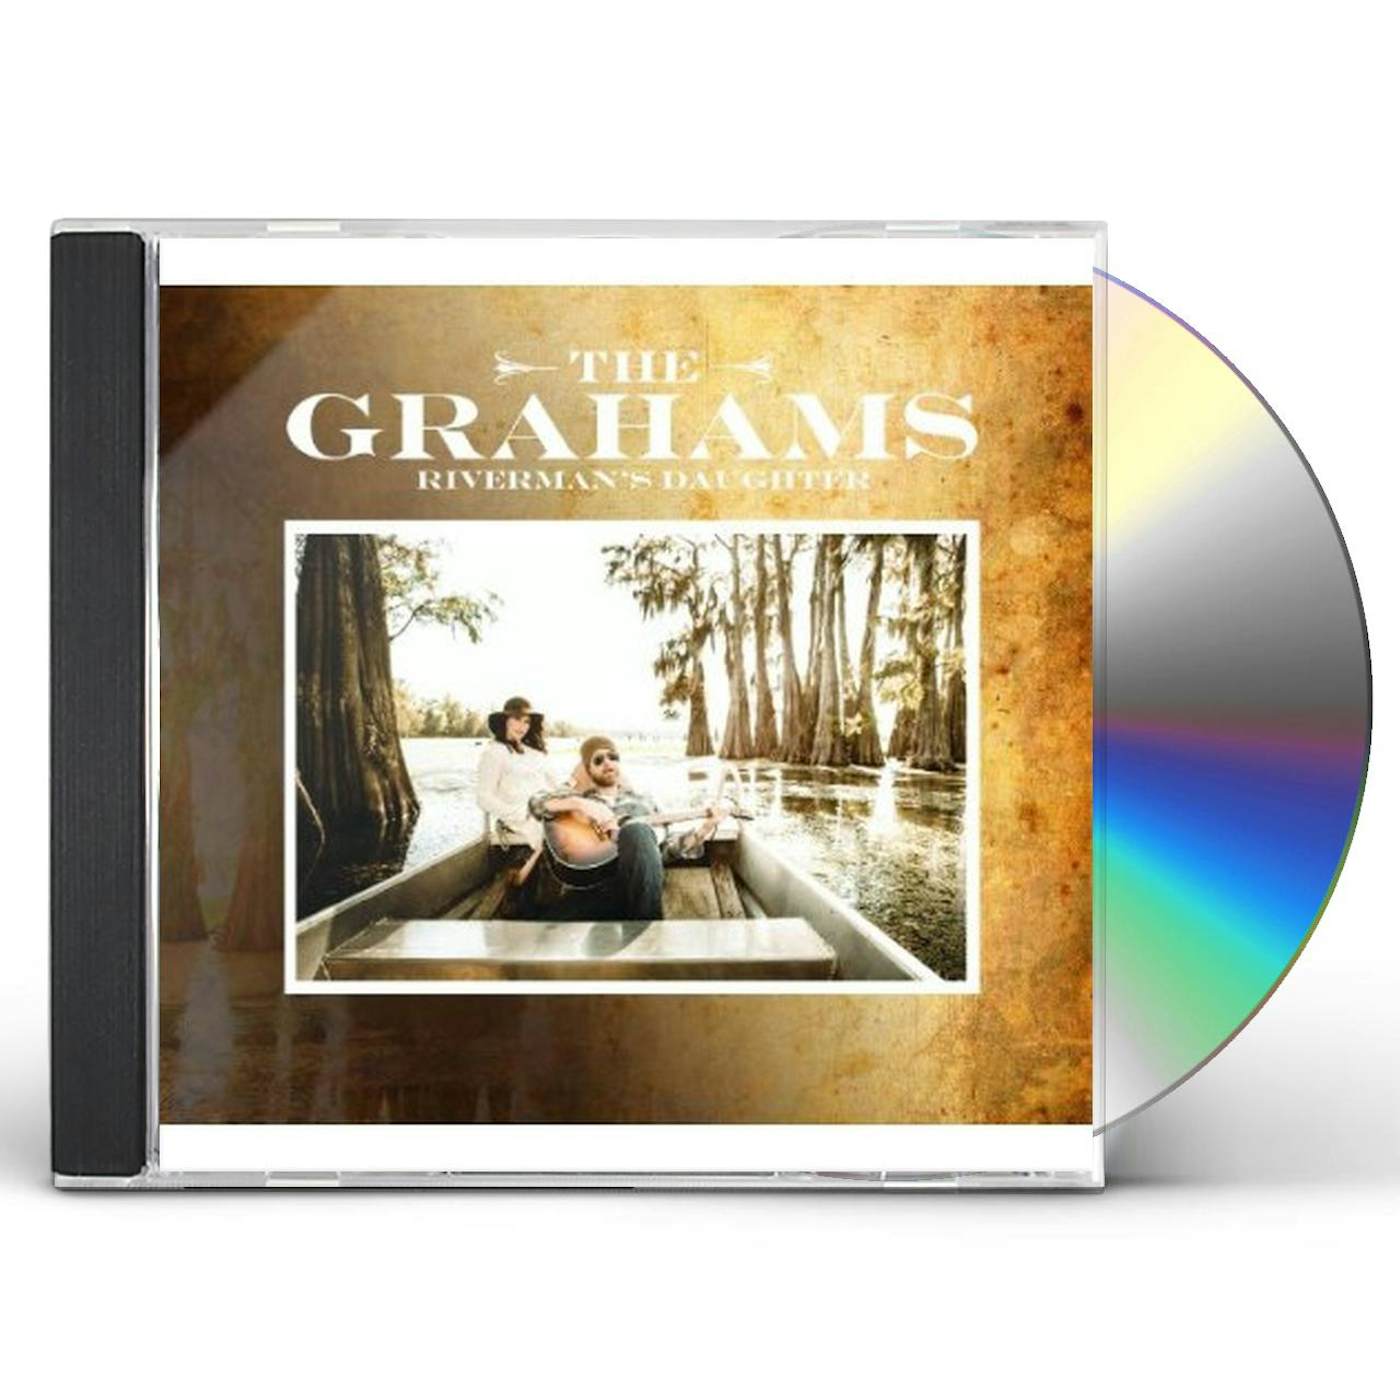 The Grahams RIVERMAN'S DAUGHTER CD